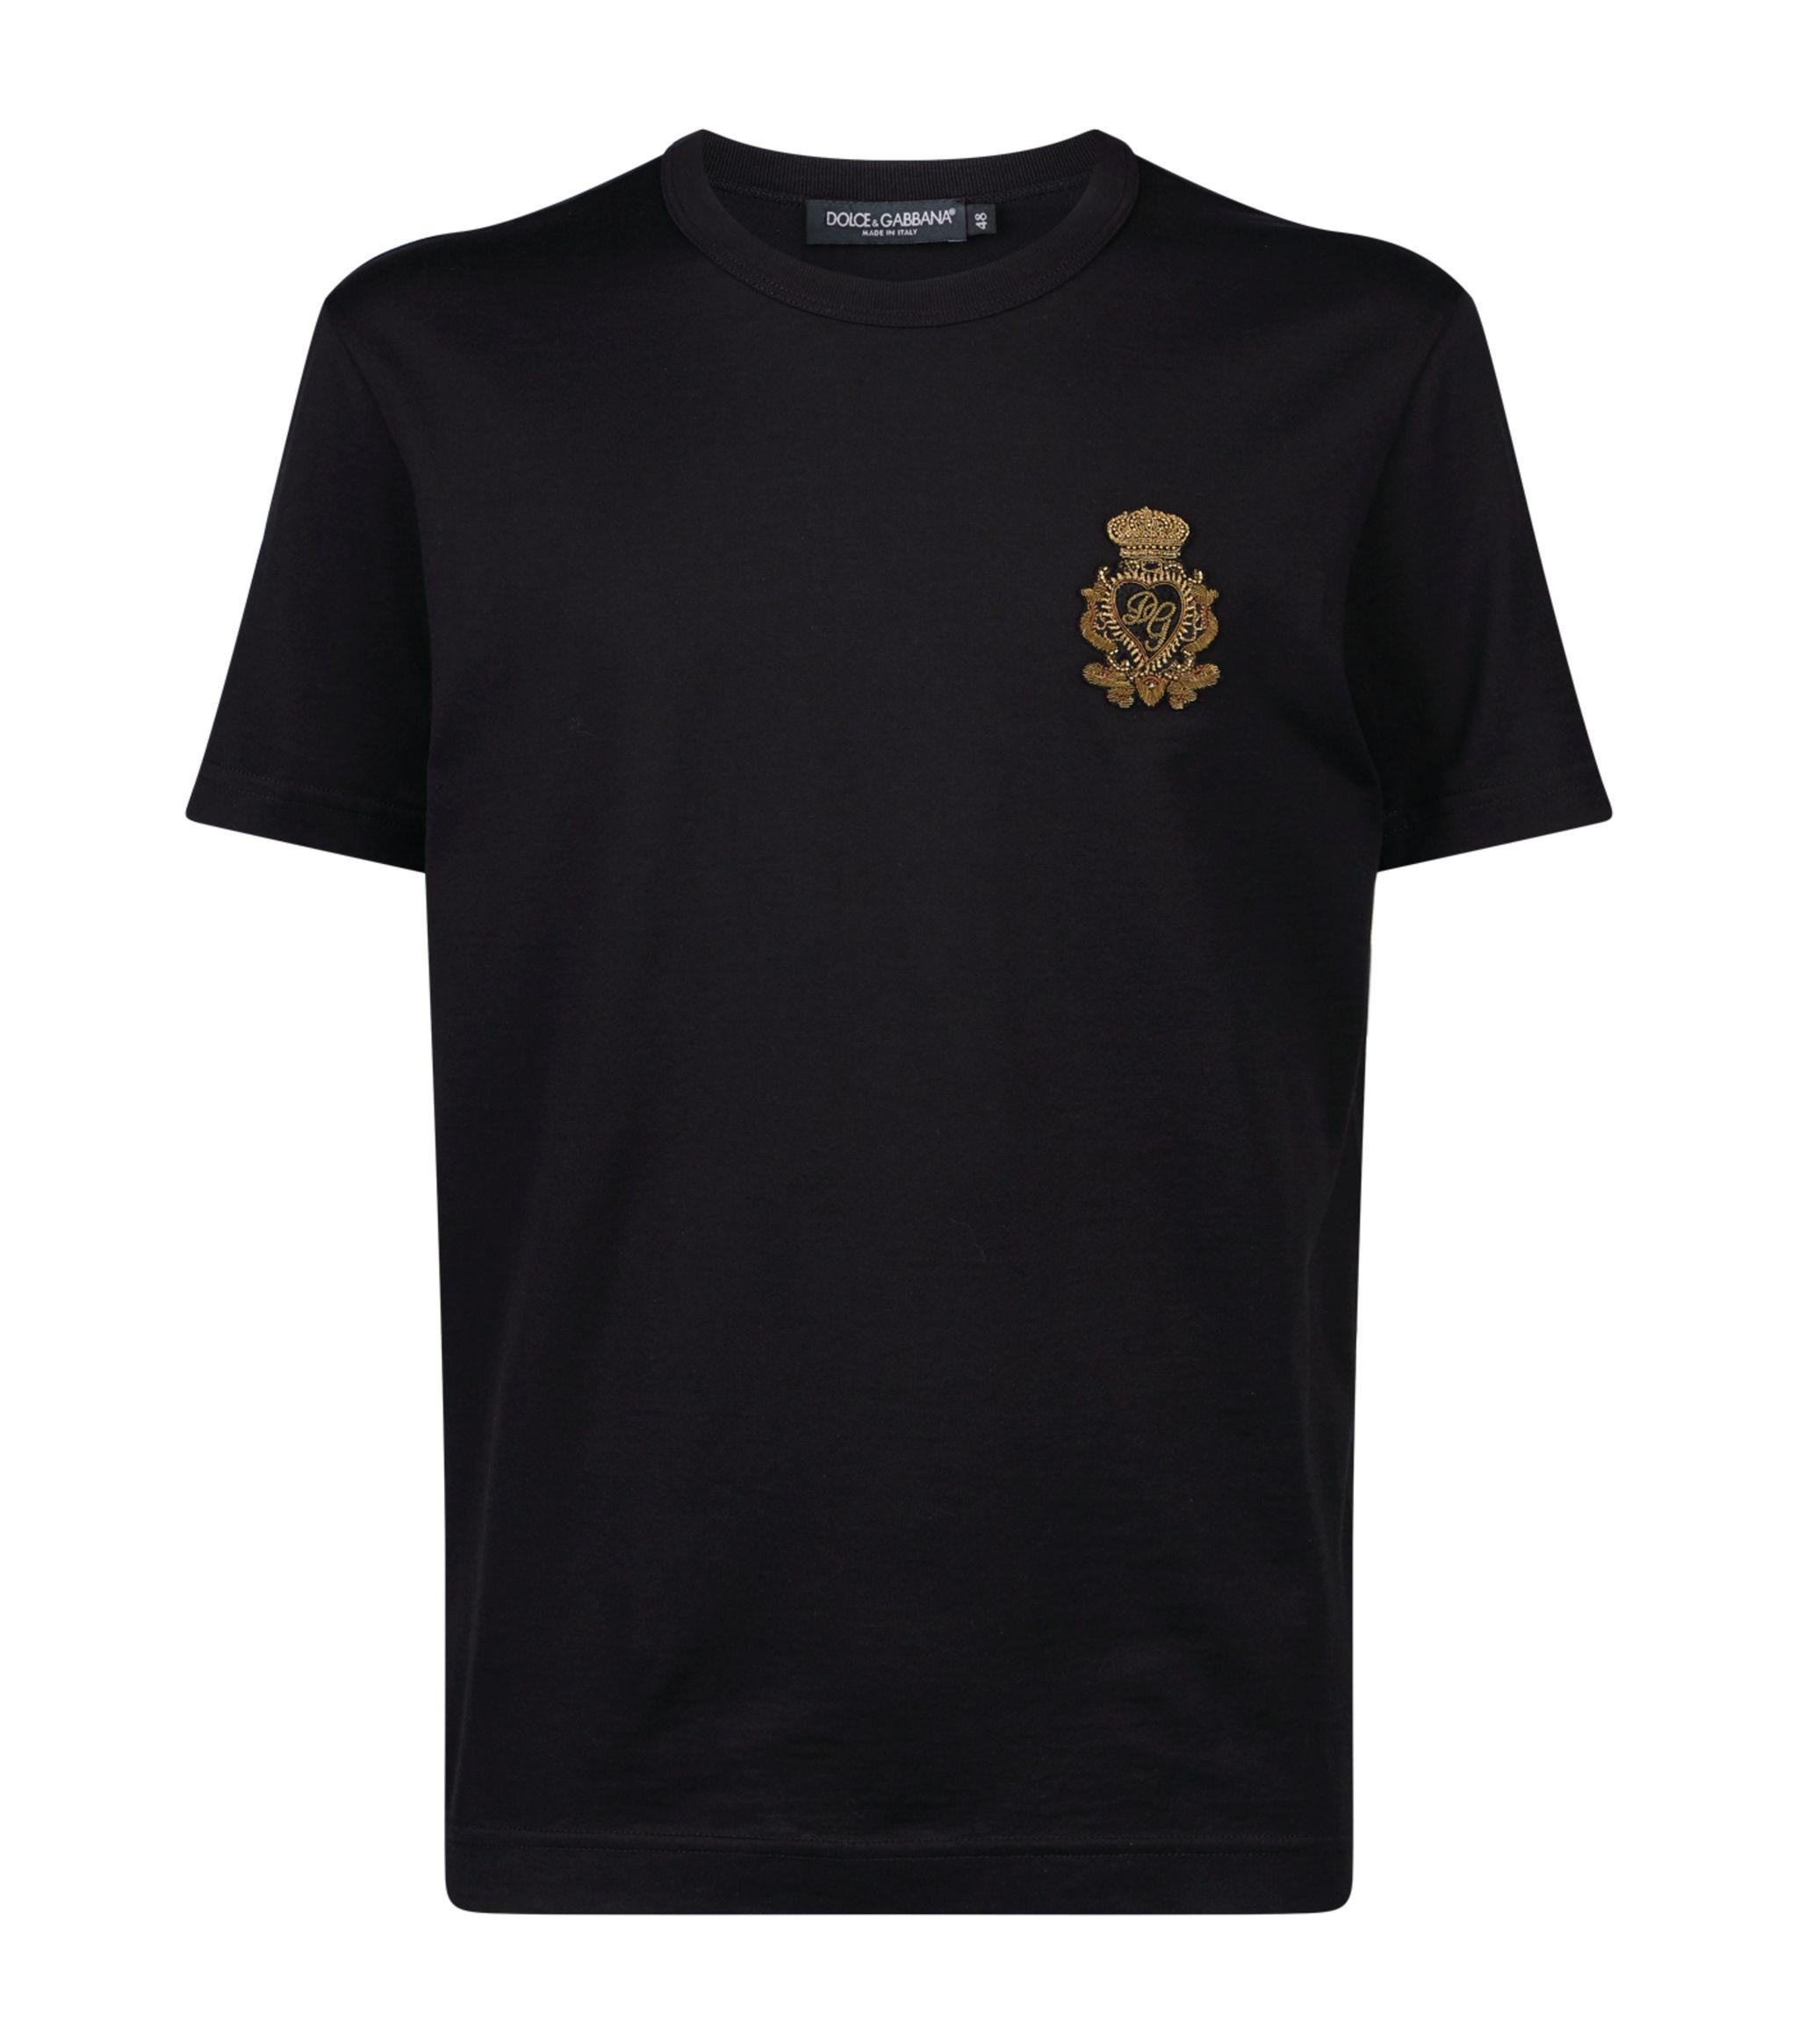 Dolce & Gabbana Cotton Crown Logo T-shirt in Black for Men - Lyst